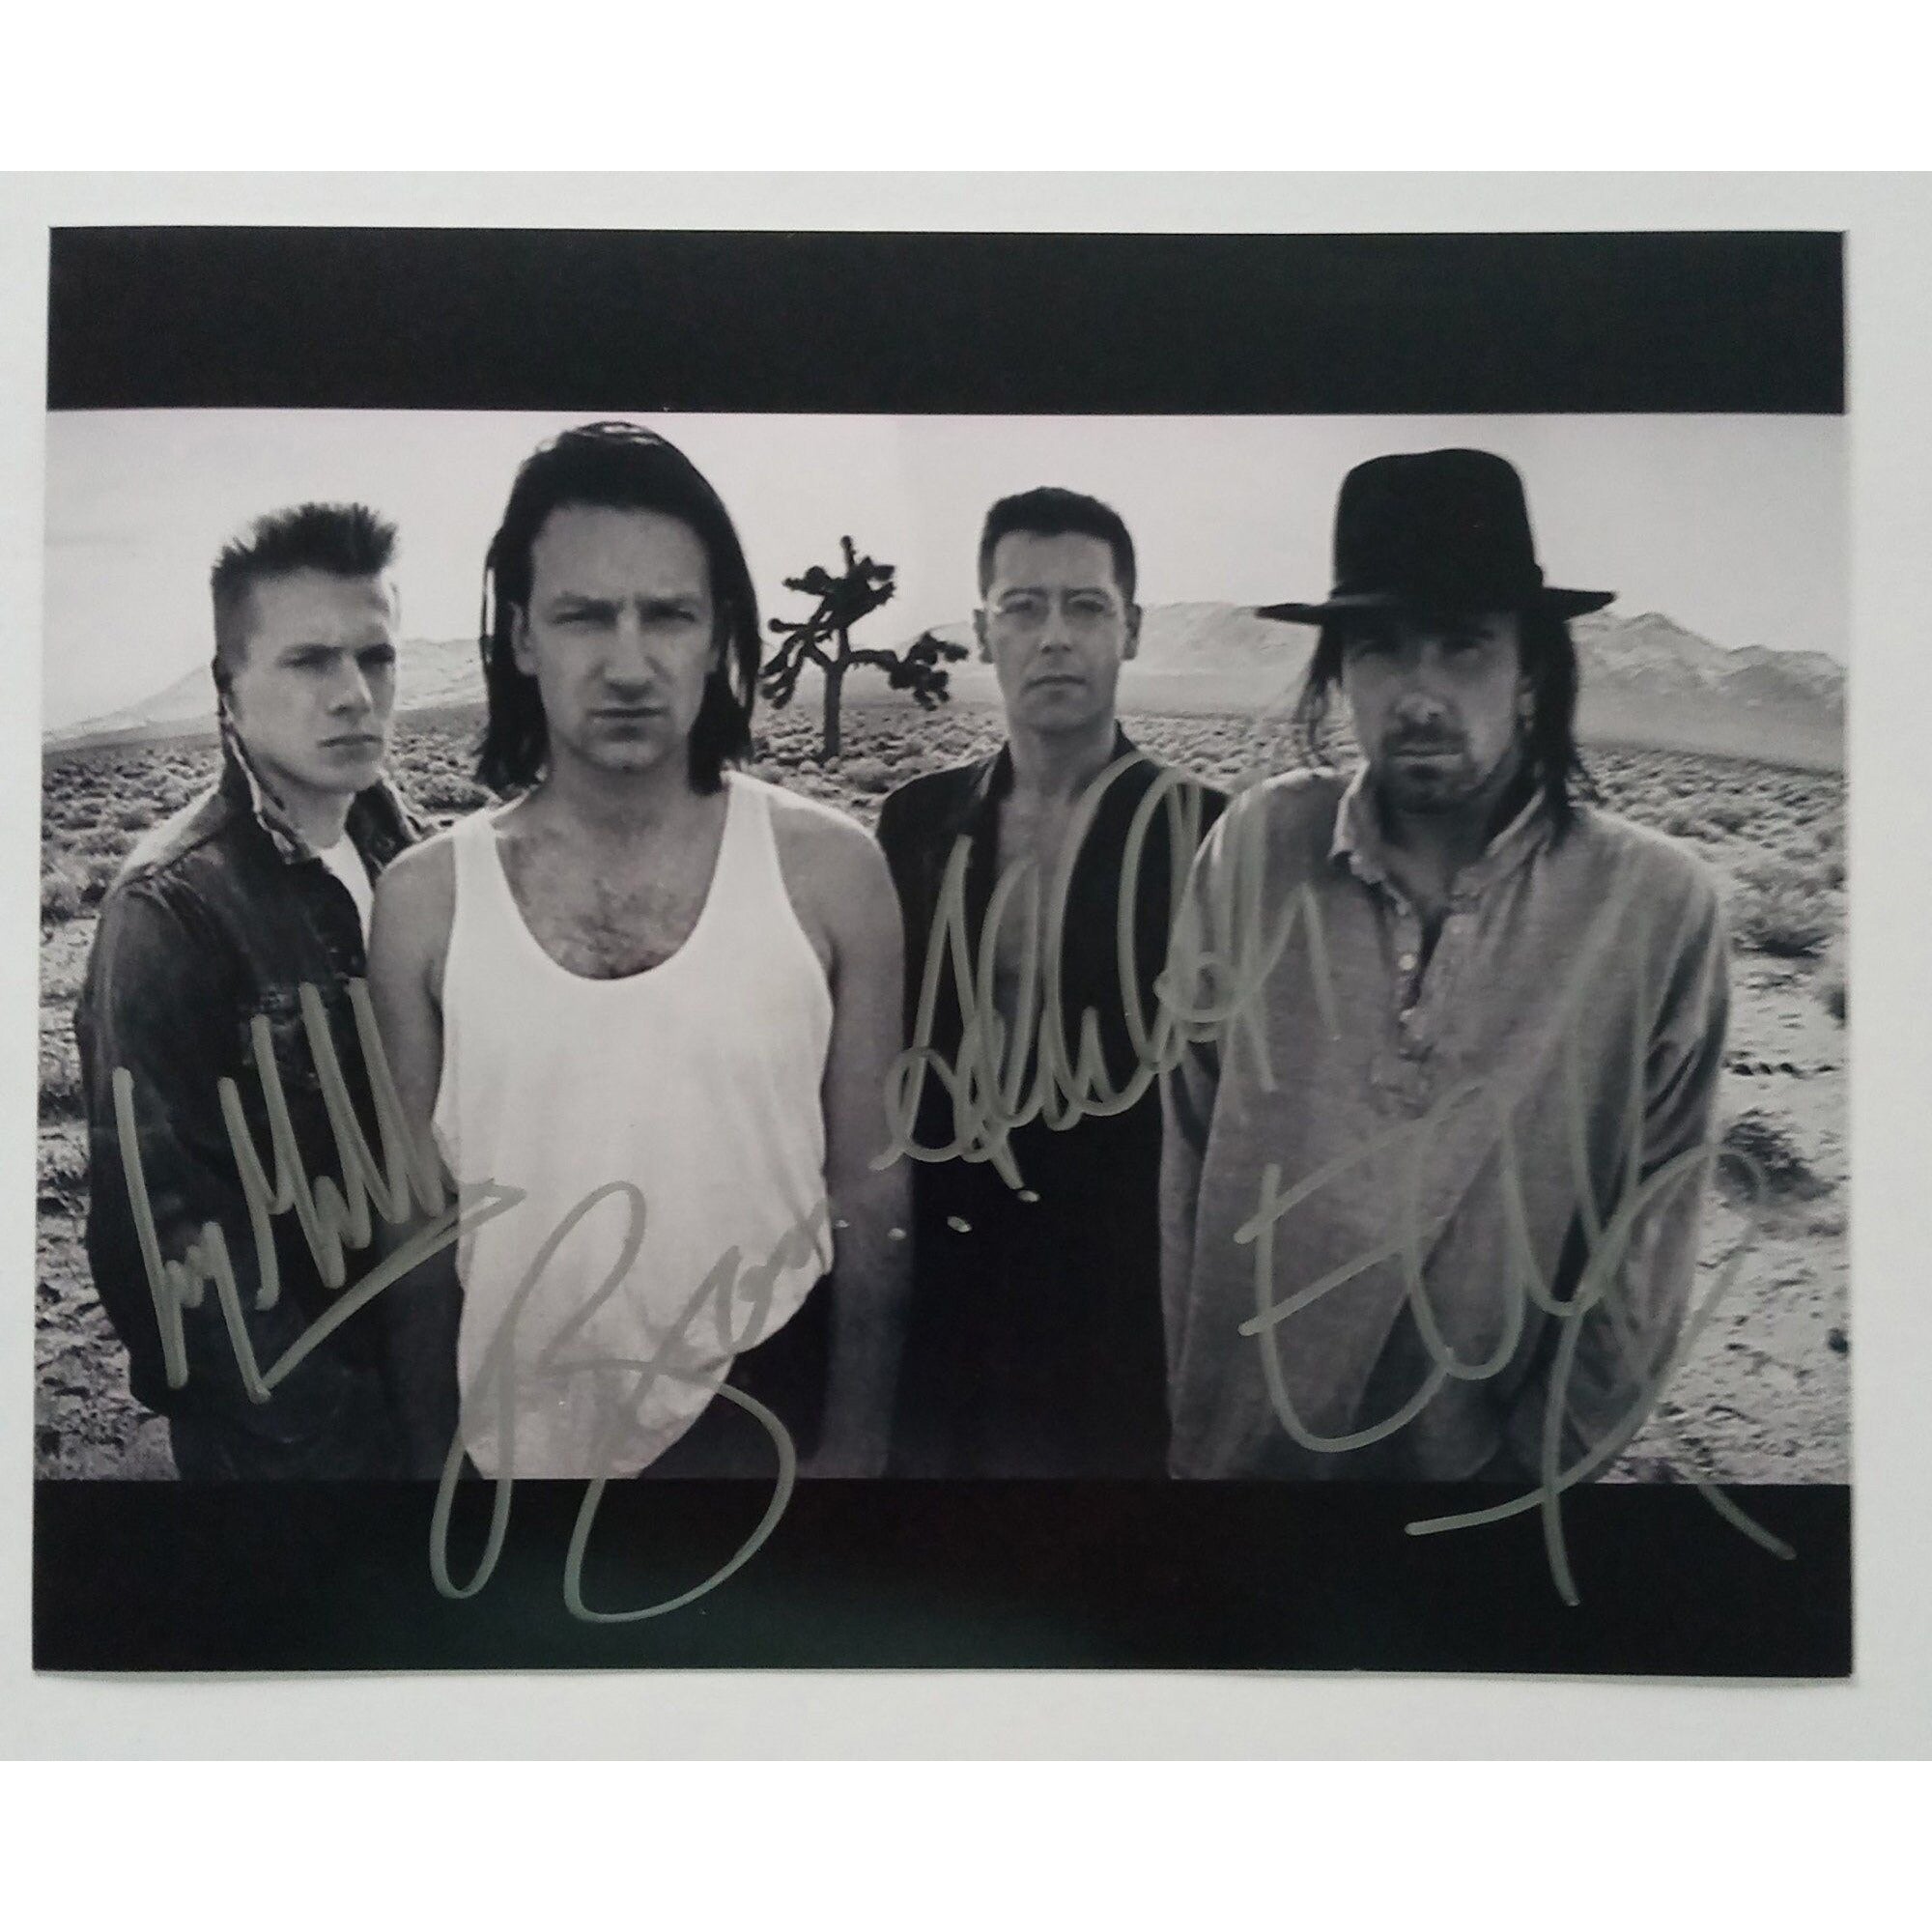 Paul Hewson  "Bono", "The Edge" David Howell Evans, Adam Clayton, Larry Mullen, 8x10 signed photo with proof